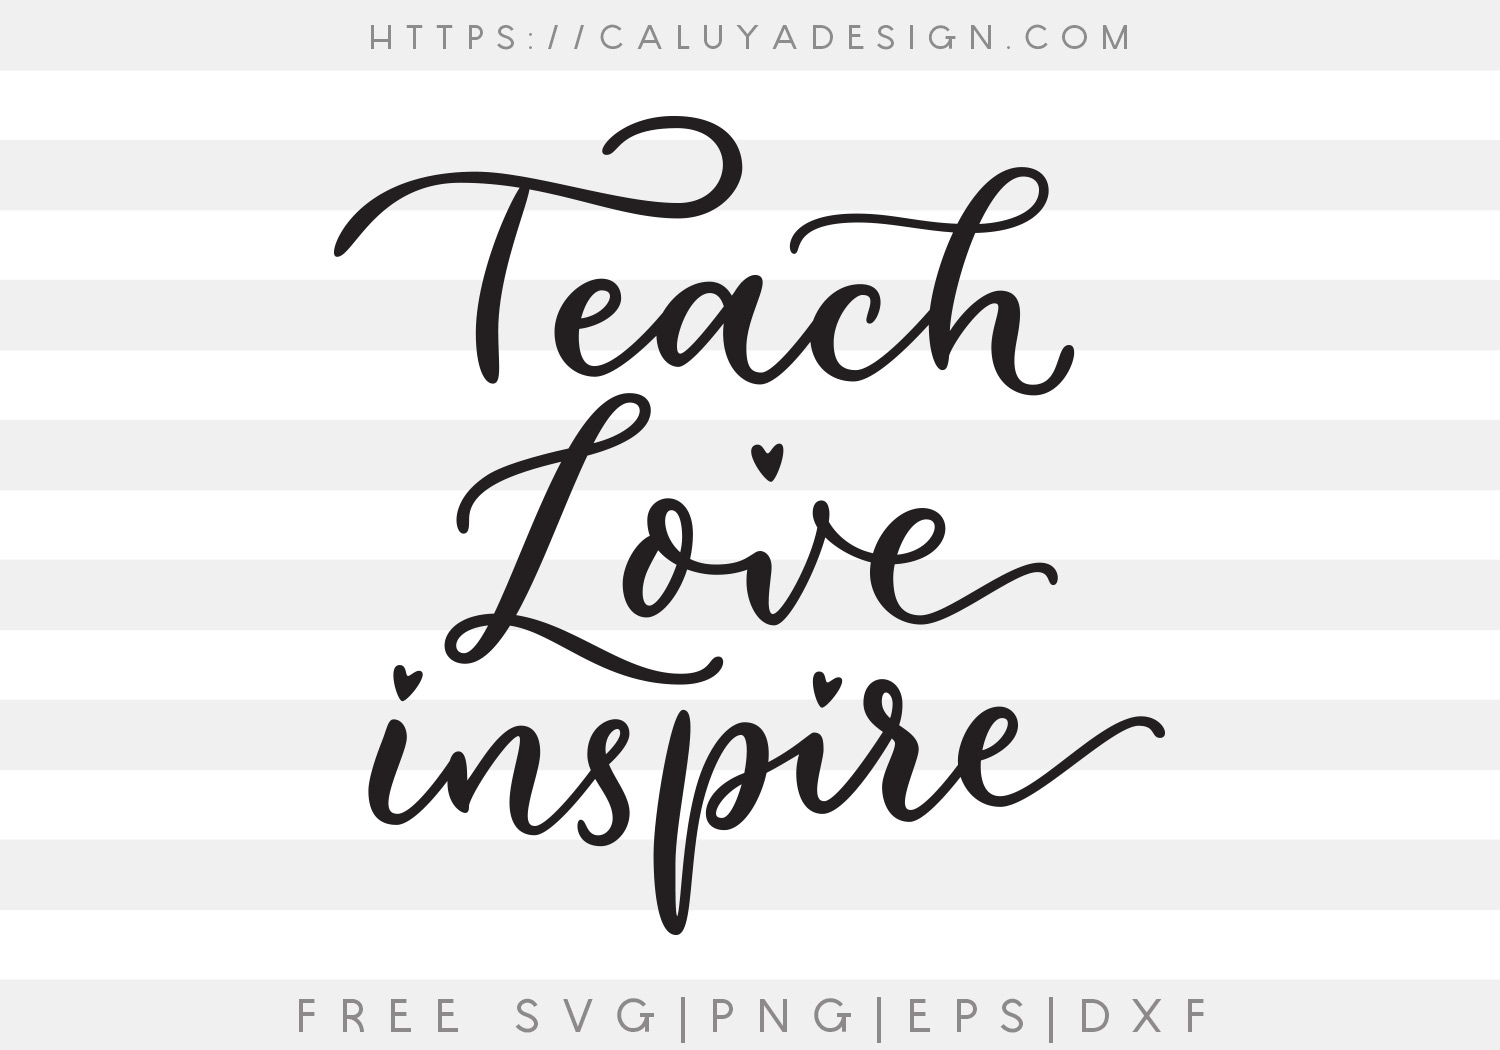 Free Teach Love Inspire Svg Free